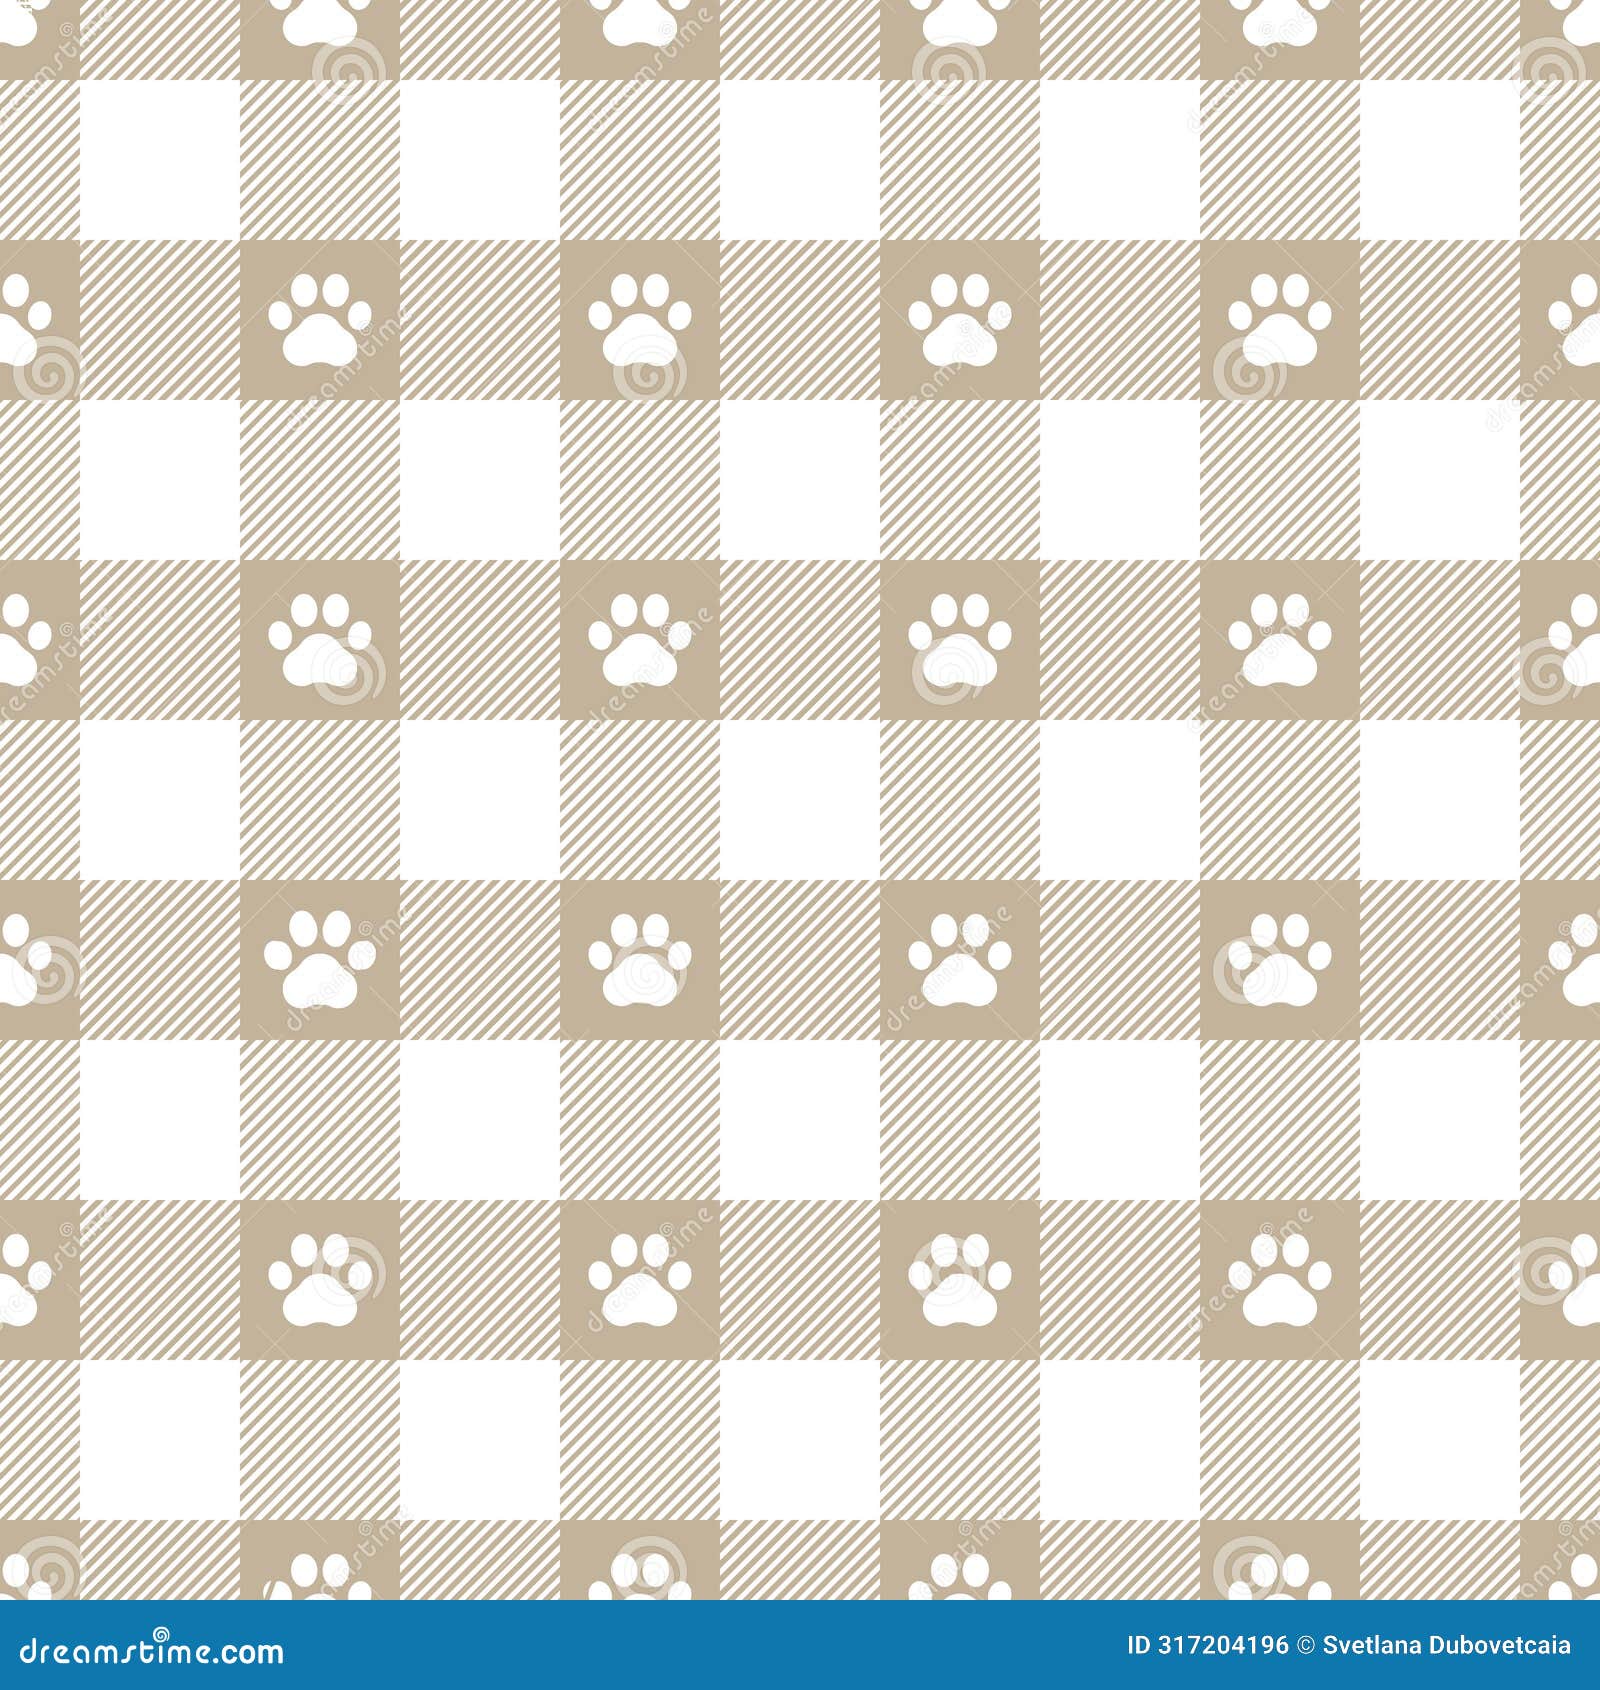 paw print seamless pattern. repeating cute plaid tartan pastel color. check  prints. repeated scottish madras fabric